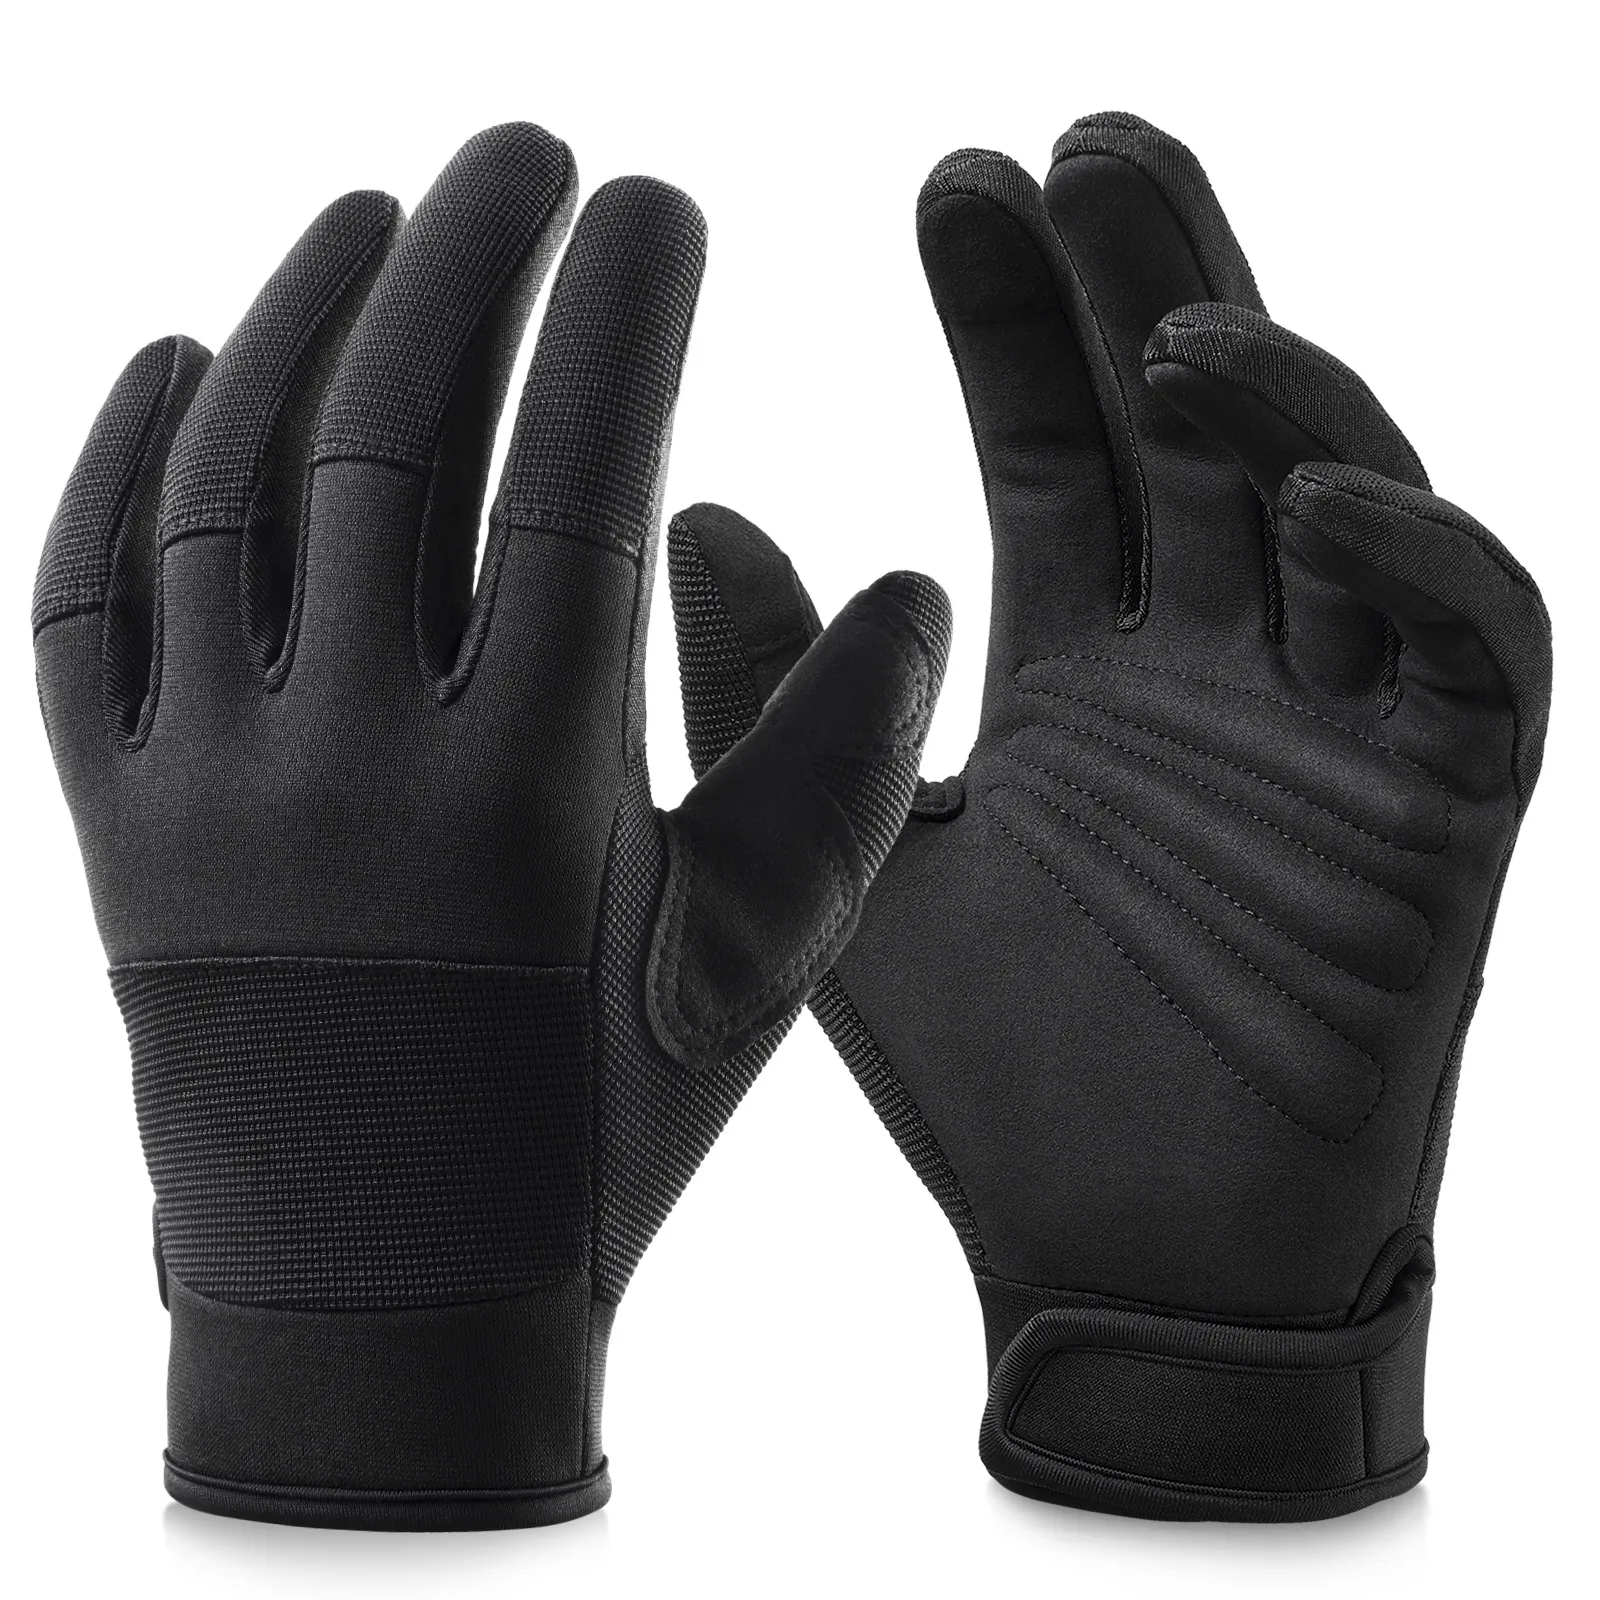 https://ae01.alicdn.com/kf/Sa025a40c18ff41f4838e210b9fb8d019v/OZERO-Military-Outdoor-Glove-Men-Women-Utility-Mechanic-Working-Glove-High-Dexterity-TouchScreen-For-Multipurpose-Excellent.jpg